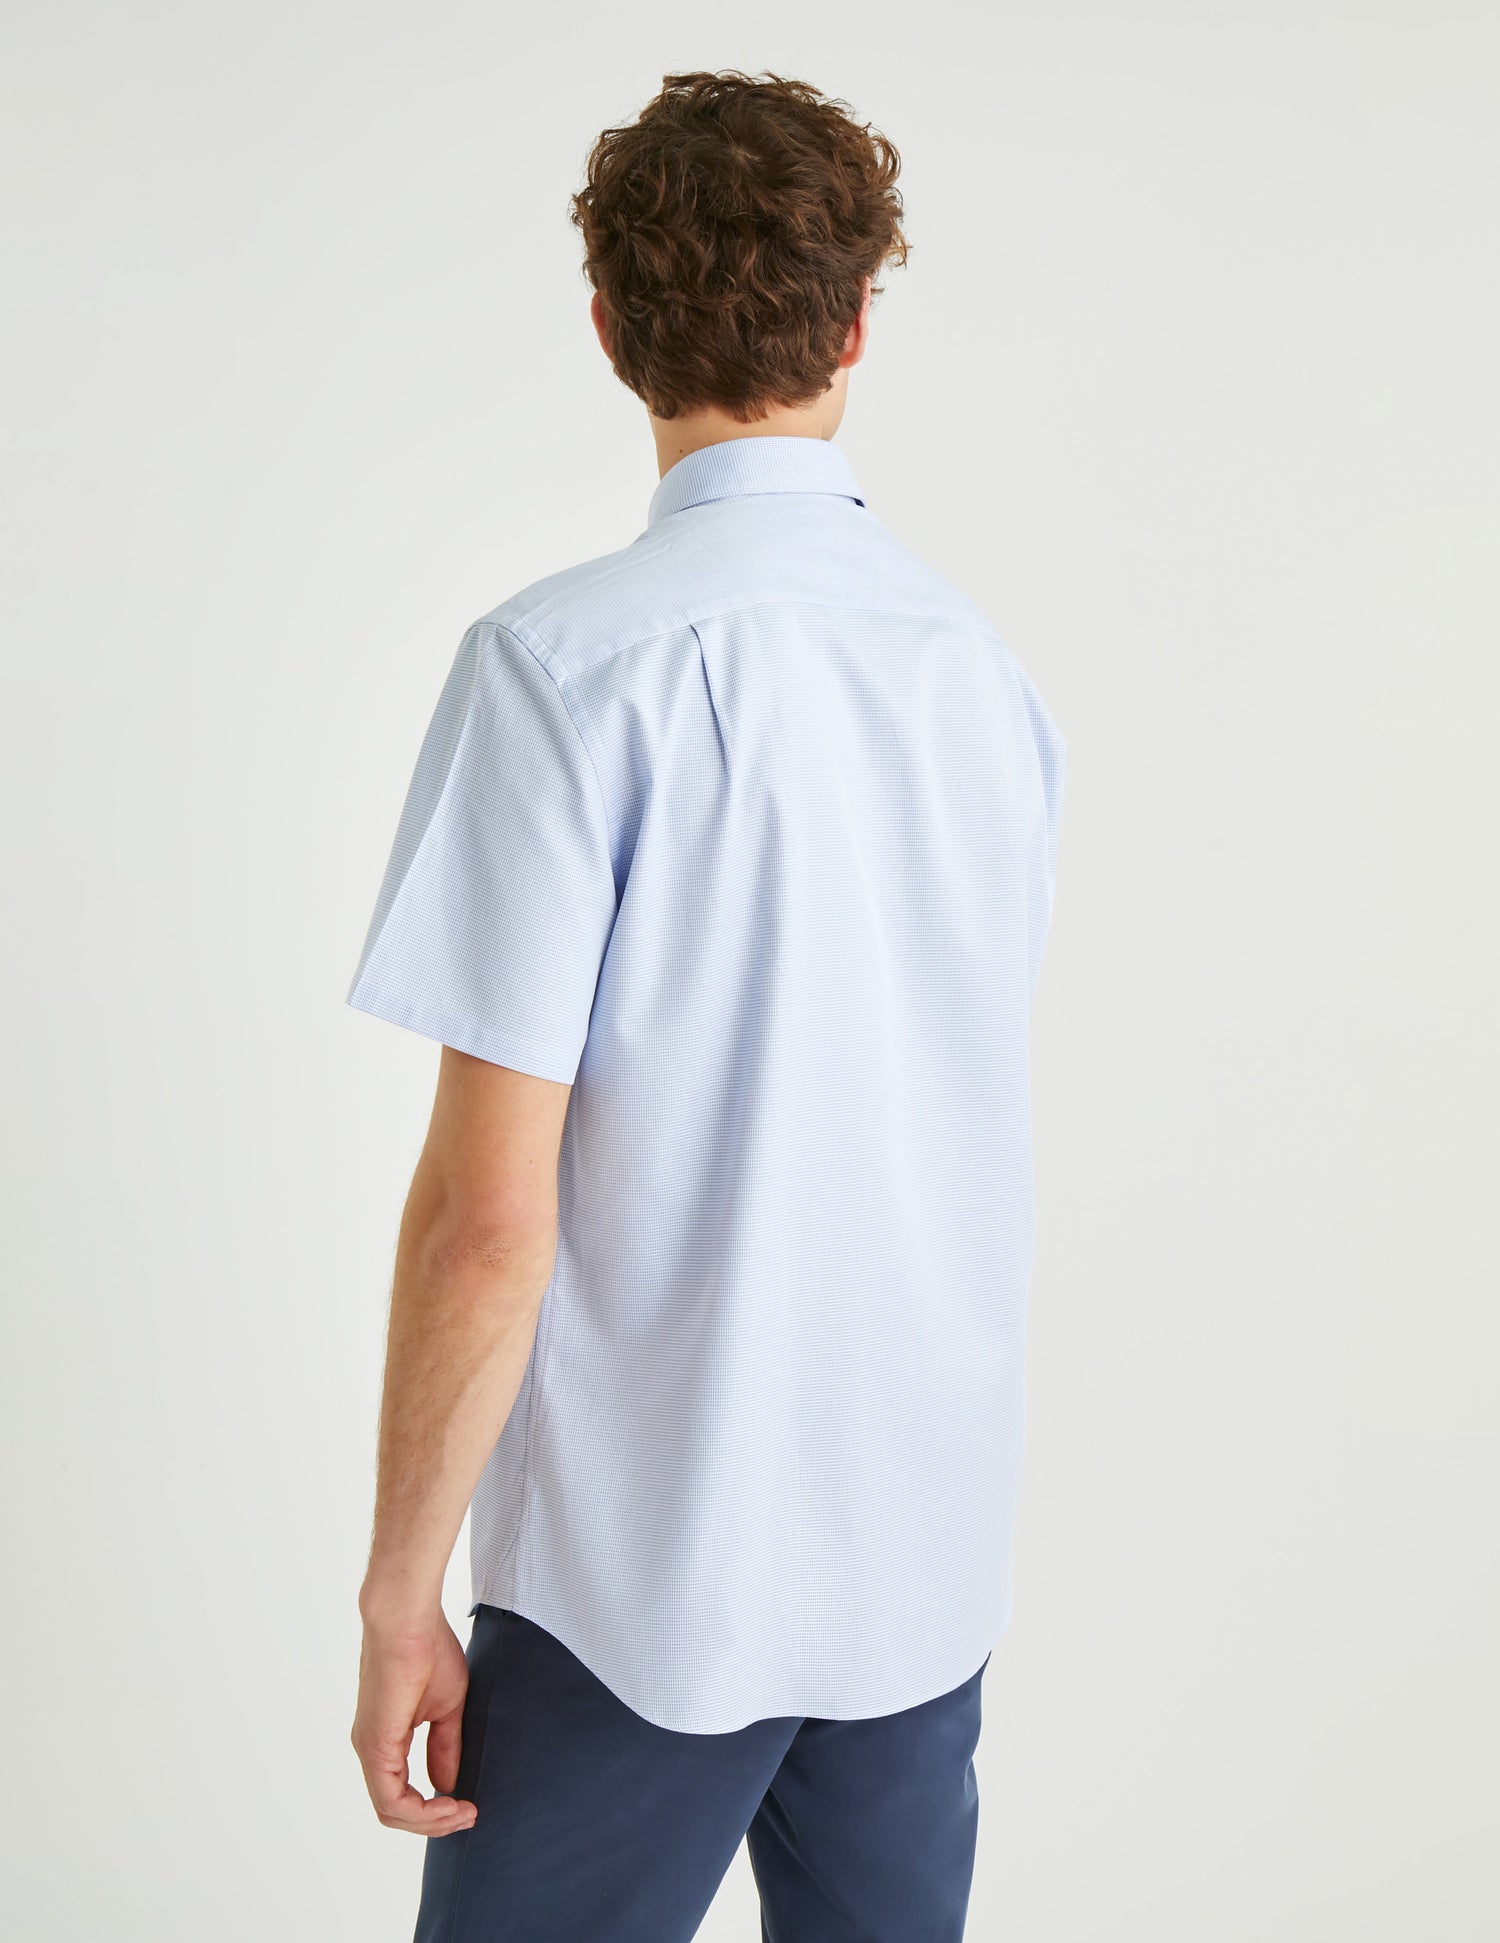 Classic shirt short sleeves blue - Shaped - American Collar#4